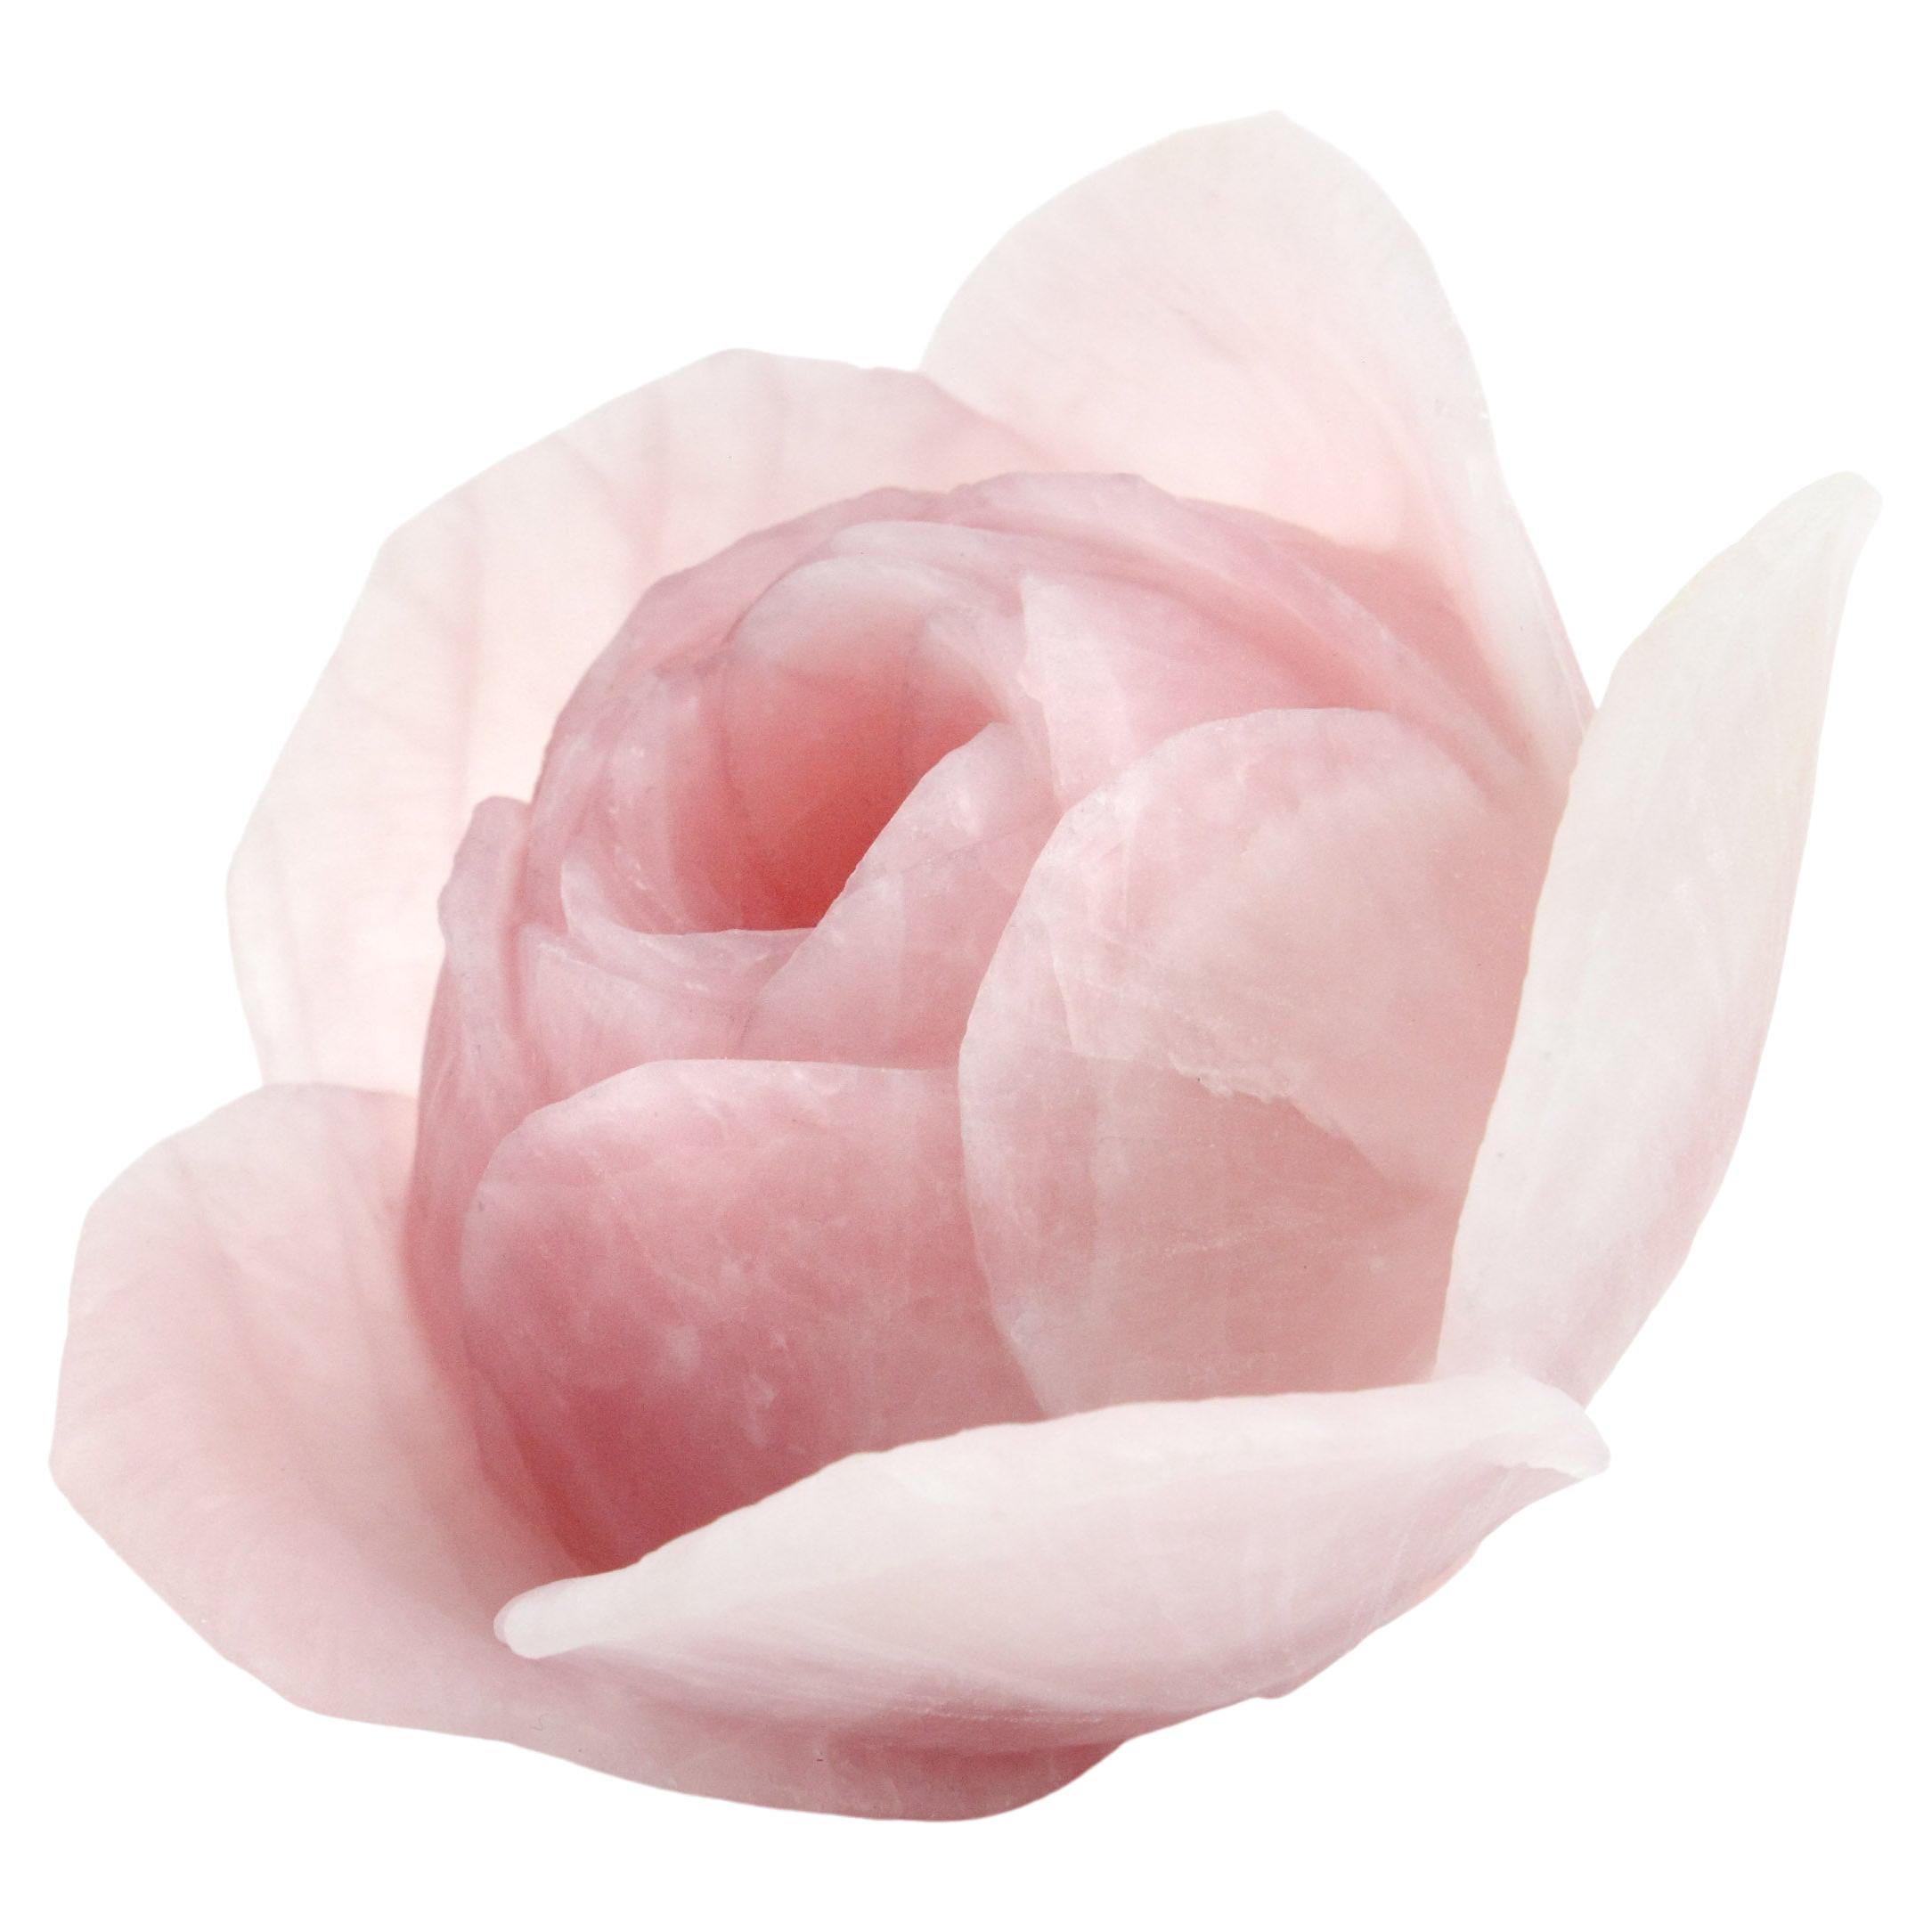 Decorative Sculpture Ornament Rose Blossom Solid Block Rose Quartz Hand Carved